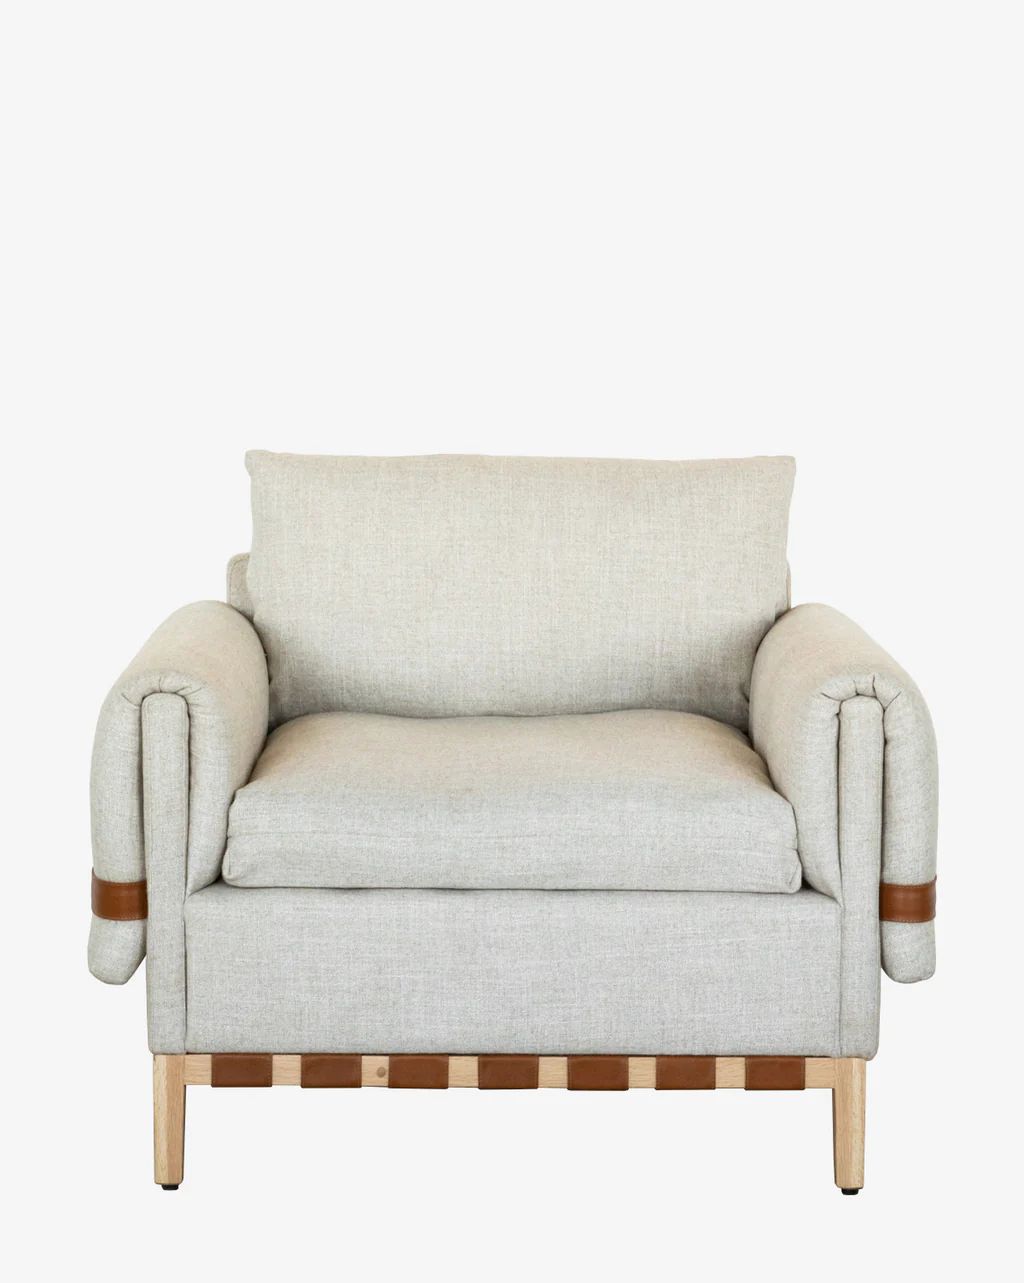 Lybbert Accent Chair | McGee & Co.